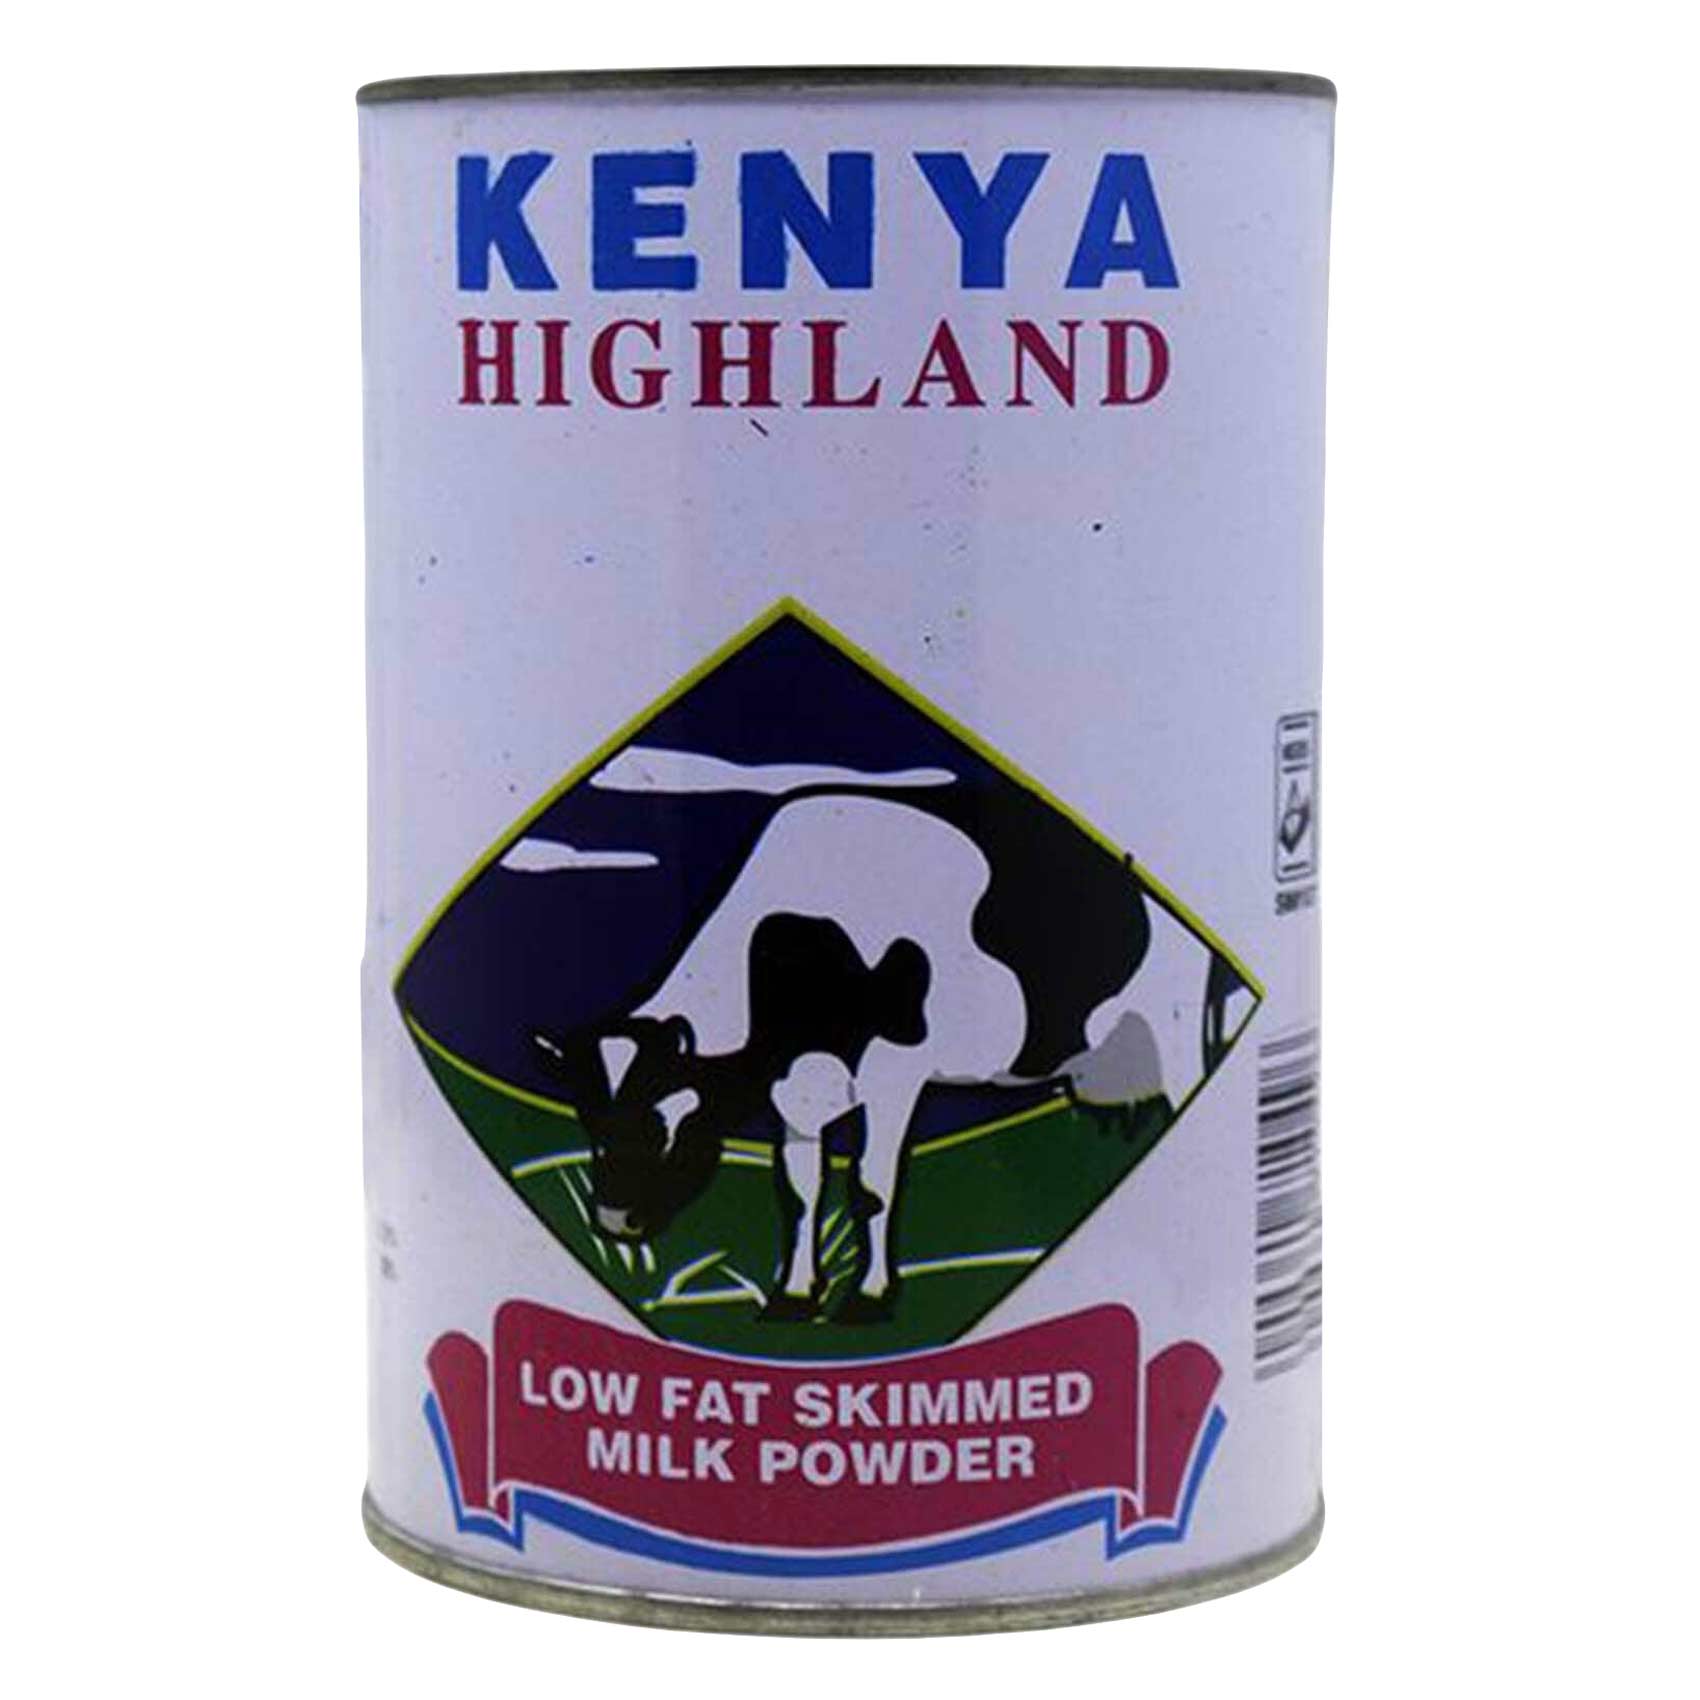 Kenya Highland Low Fat Skimmed Milk Powder 500g